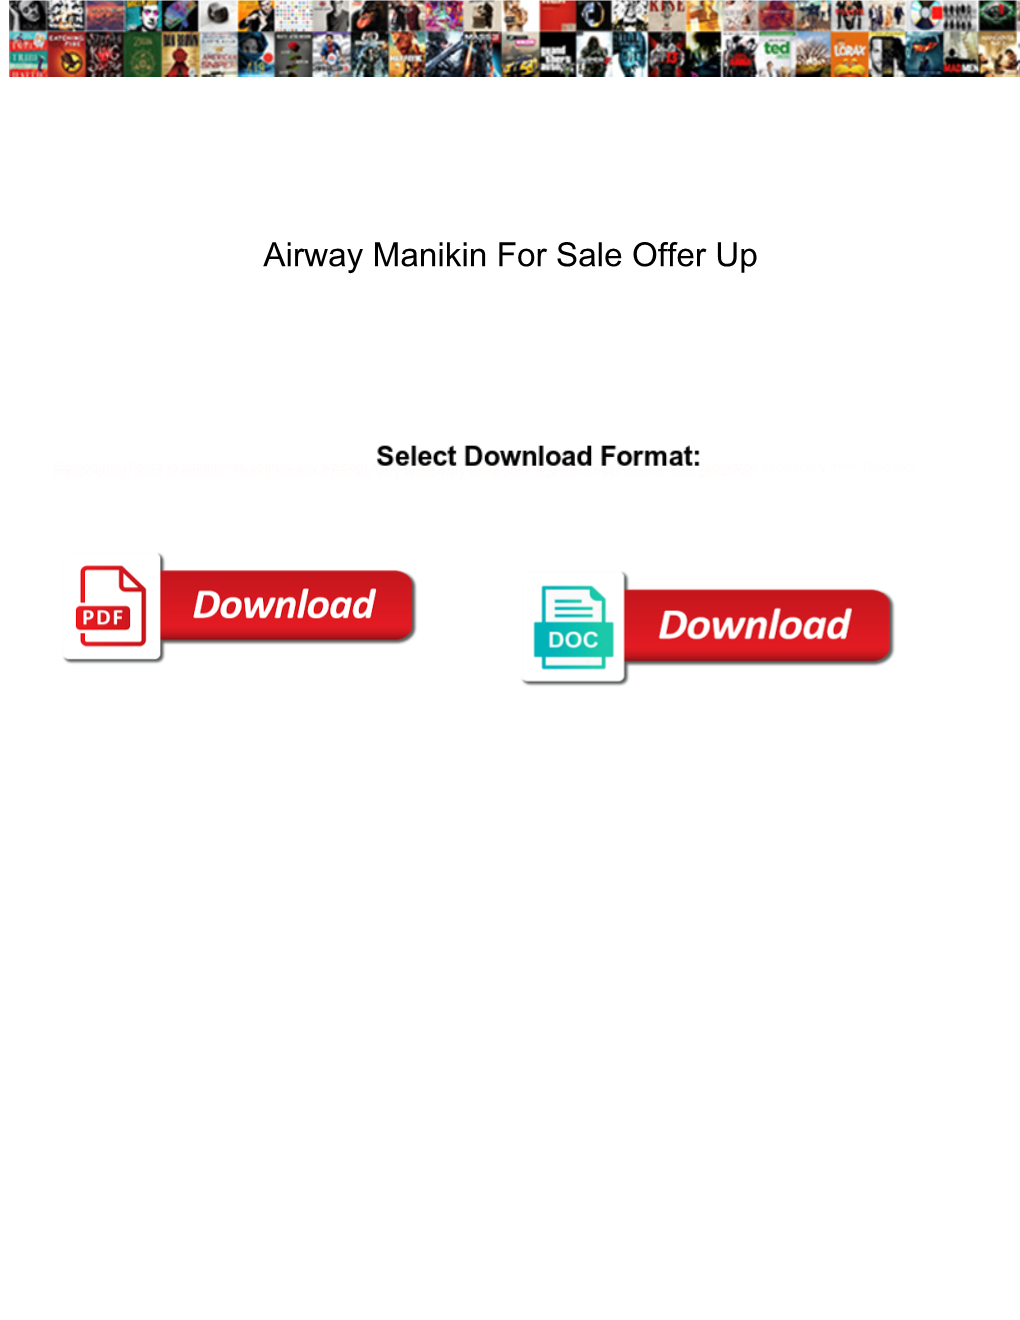 Airway Manikin for Sale Offer Up